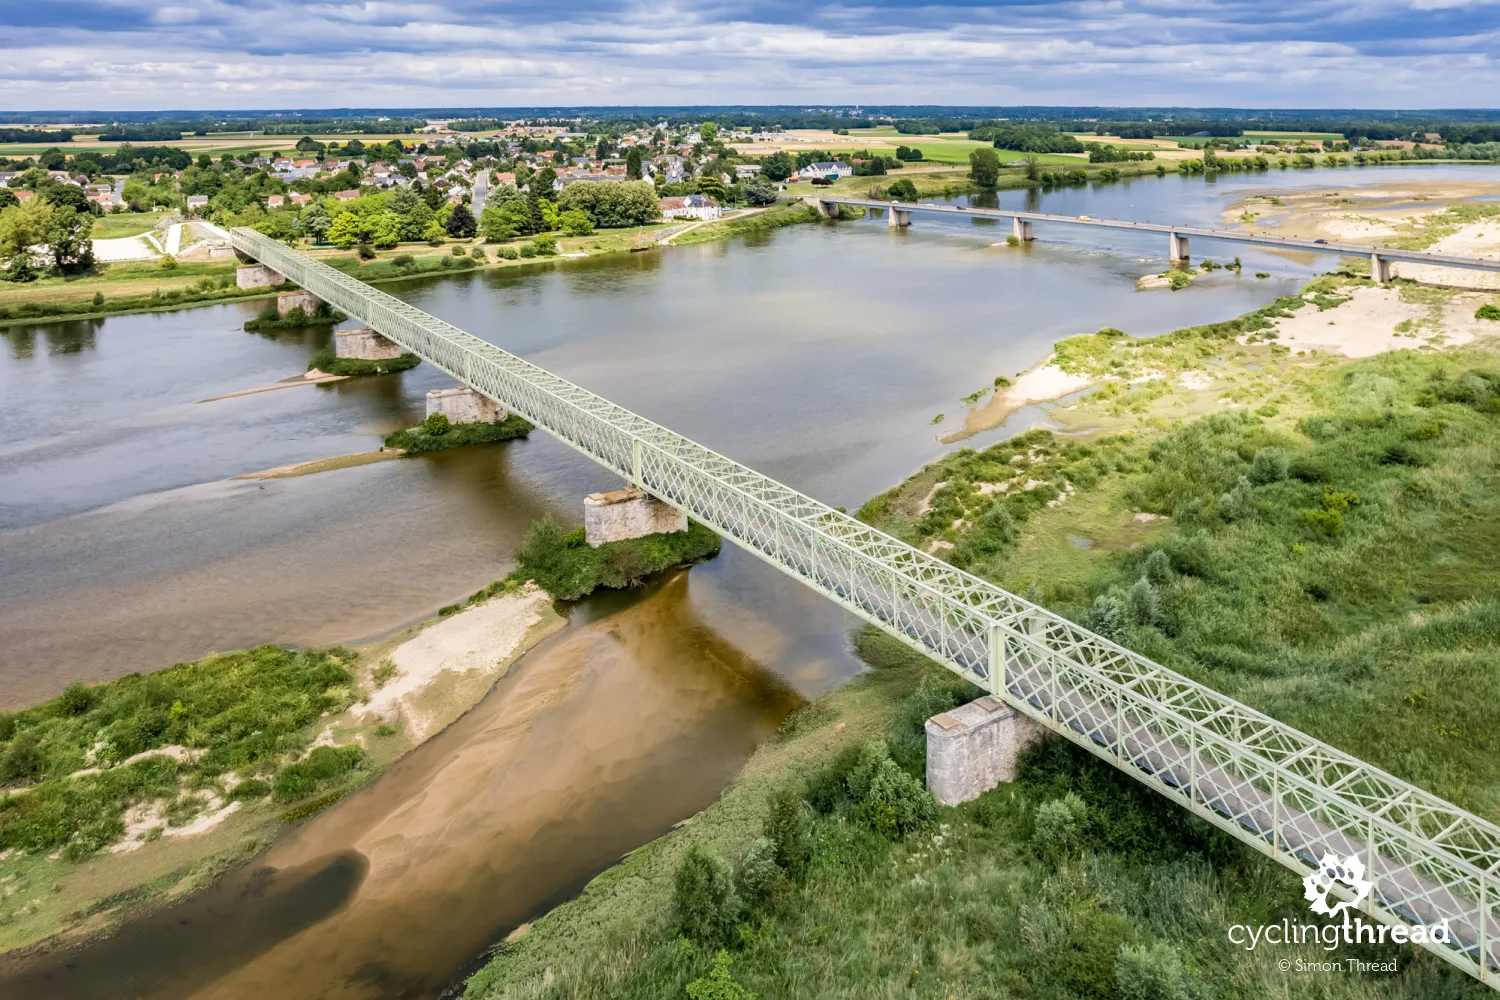 Railway bicycle bridge over the Loire River